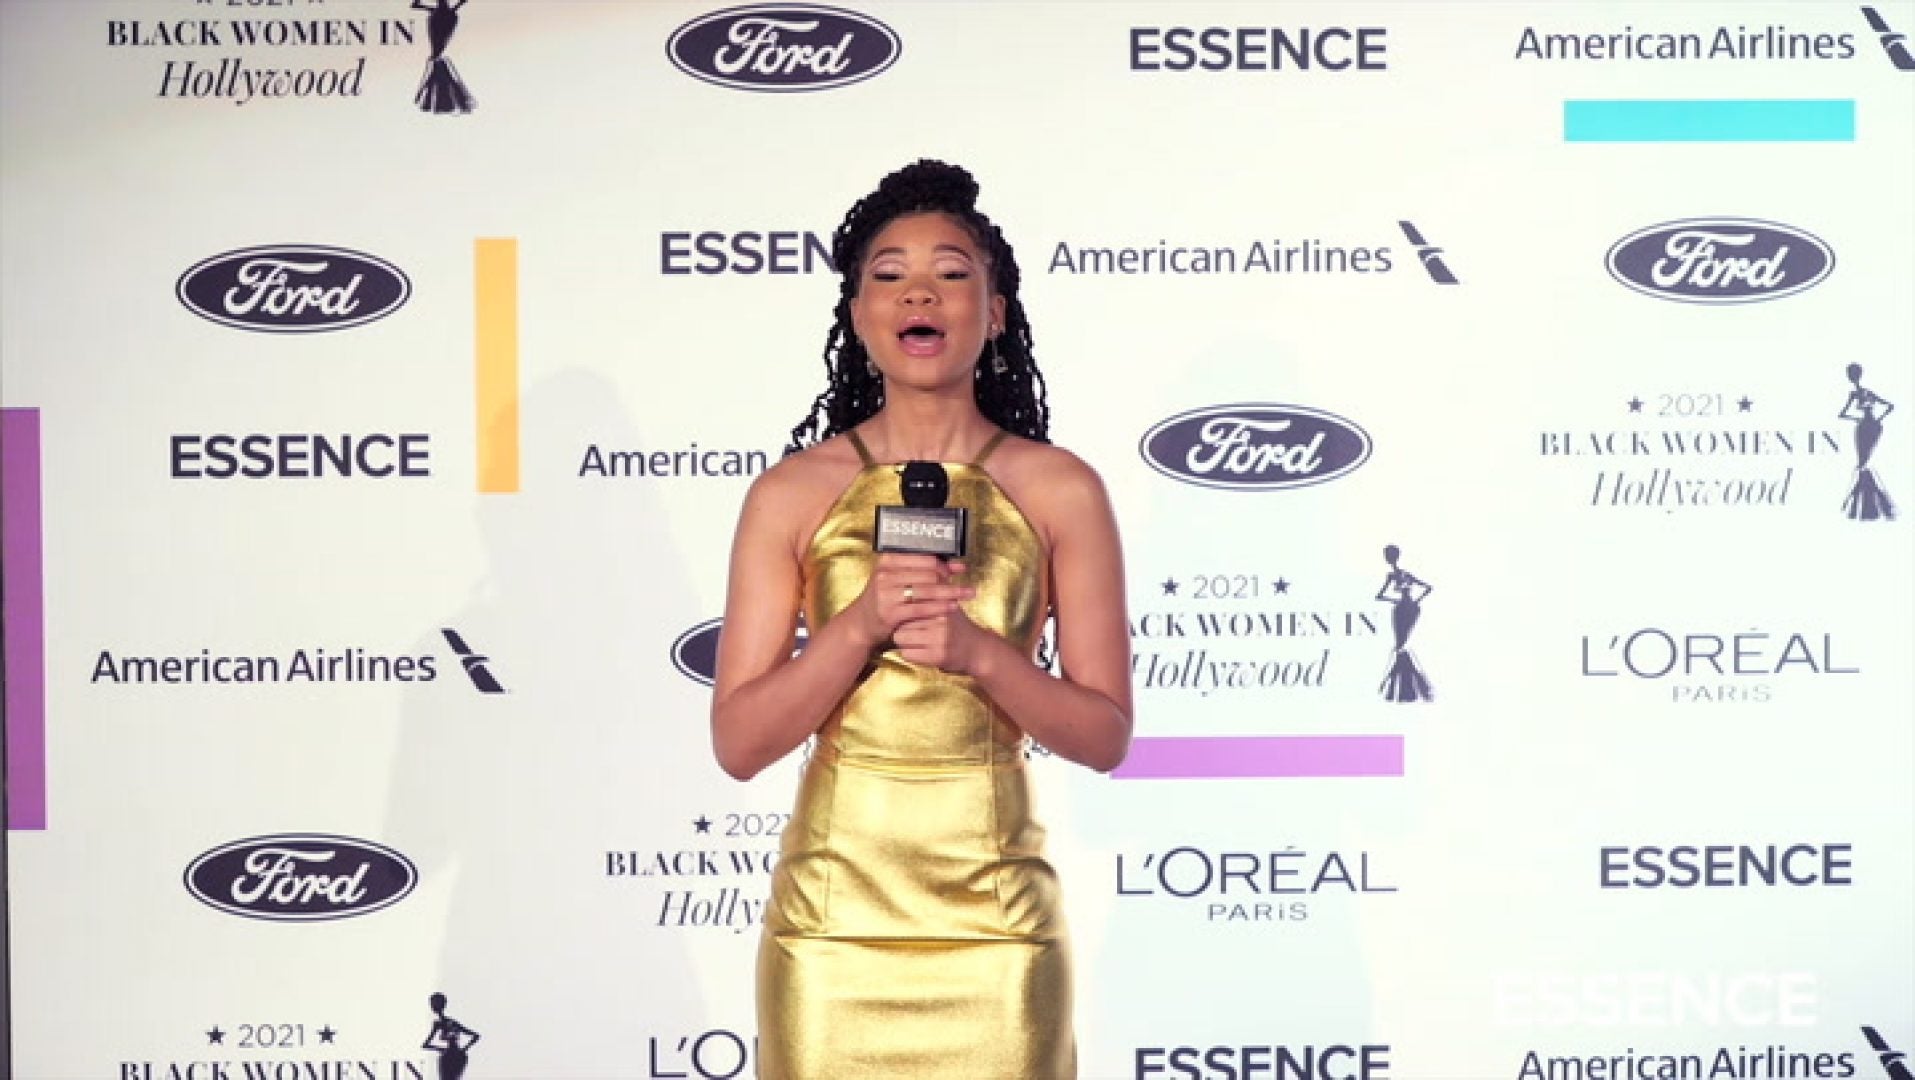 Black Woman in Hollywood Full Award Ceremony EDIT